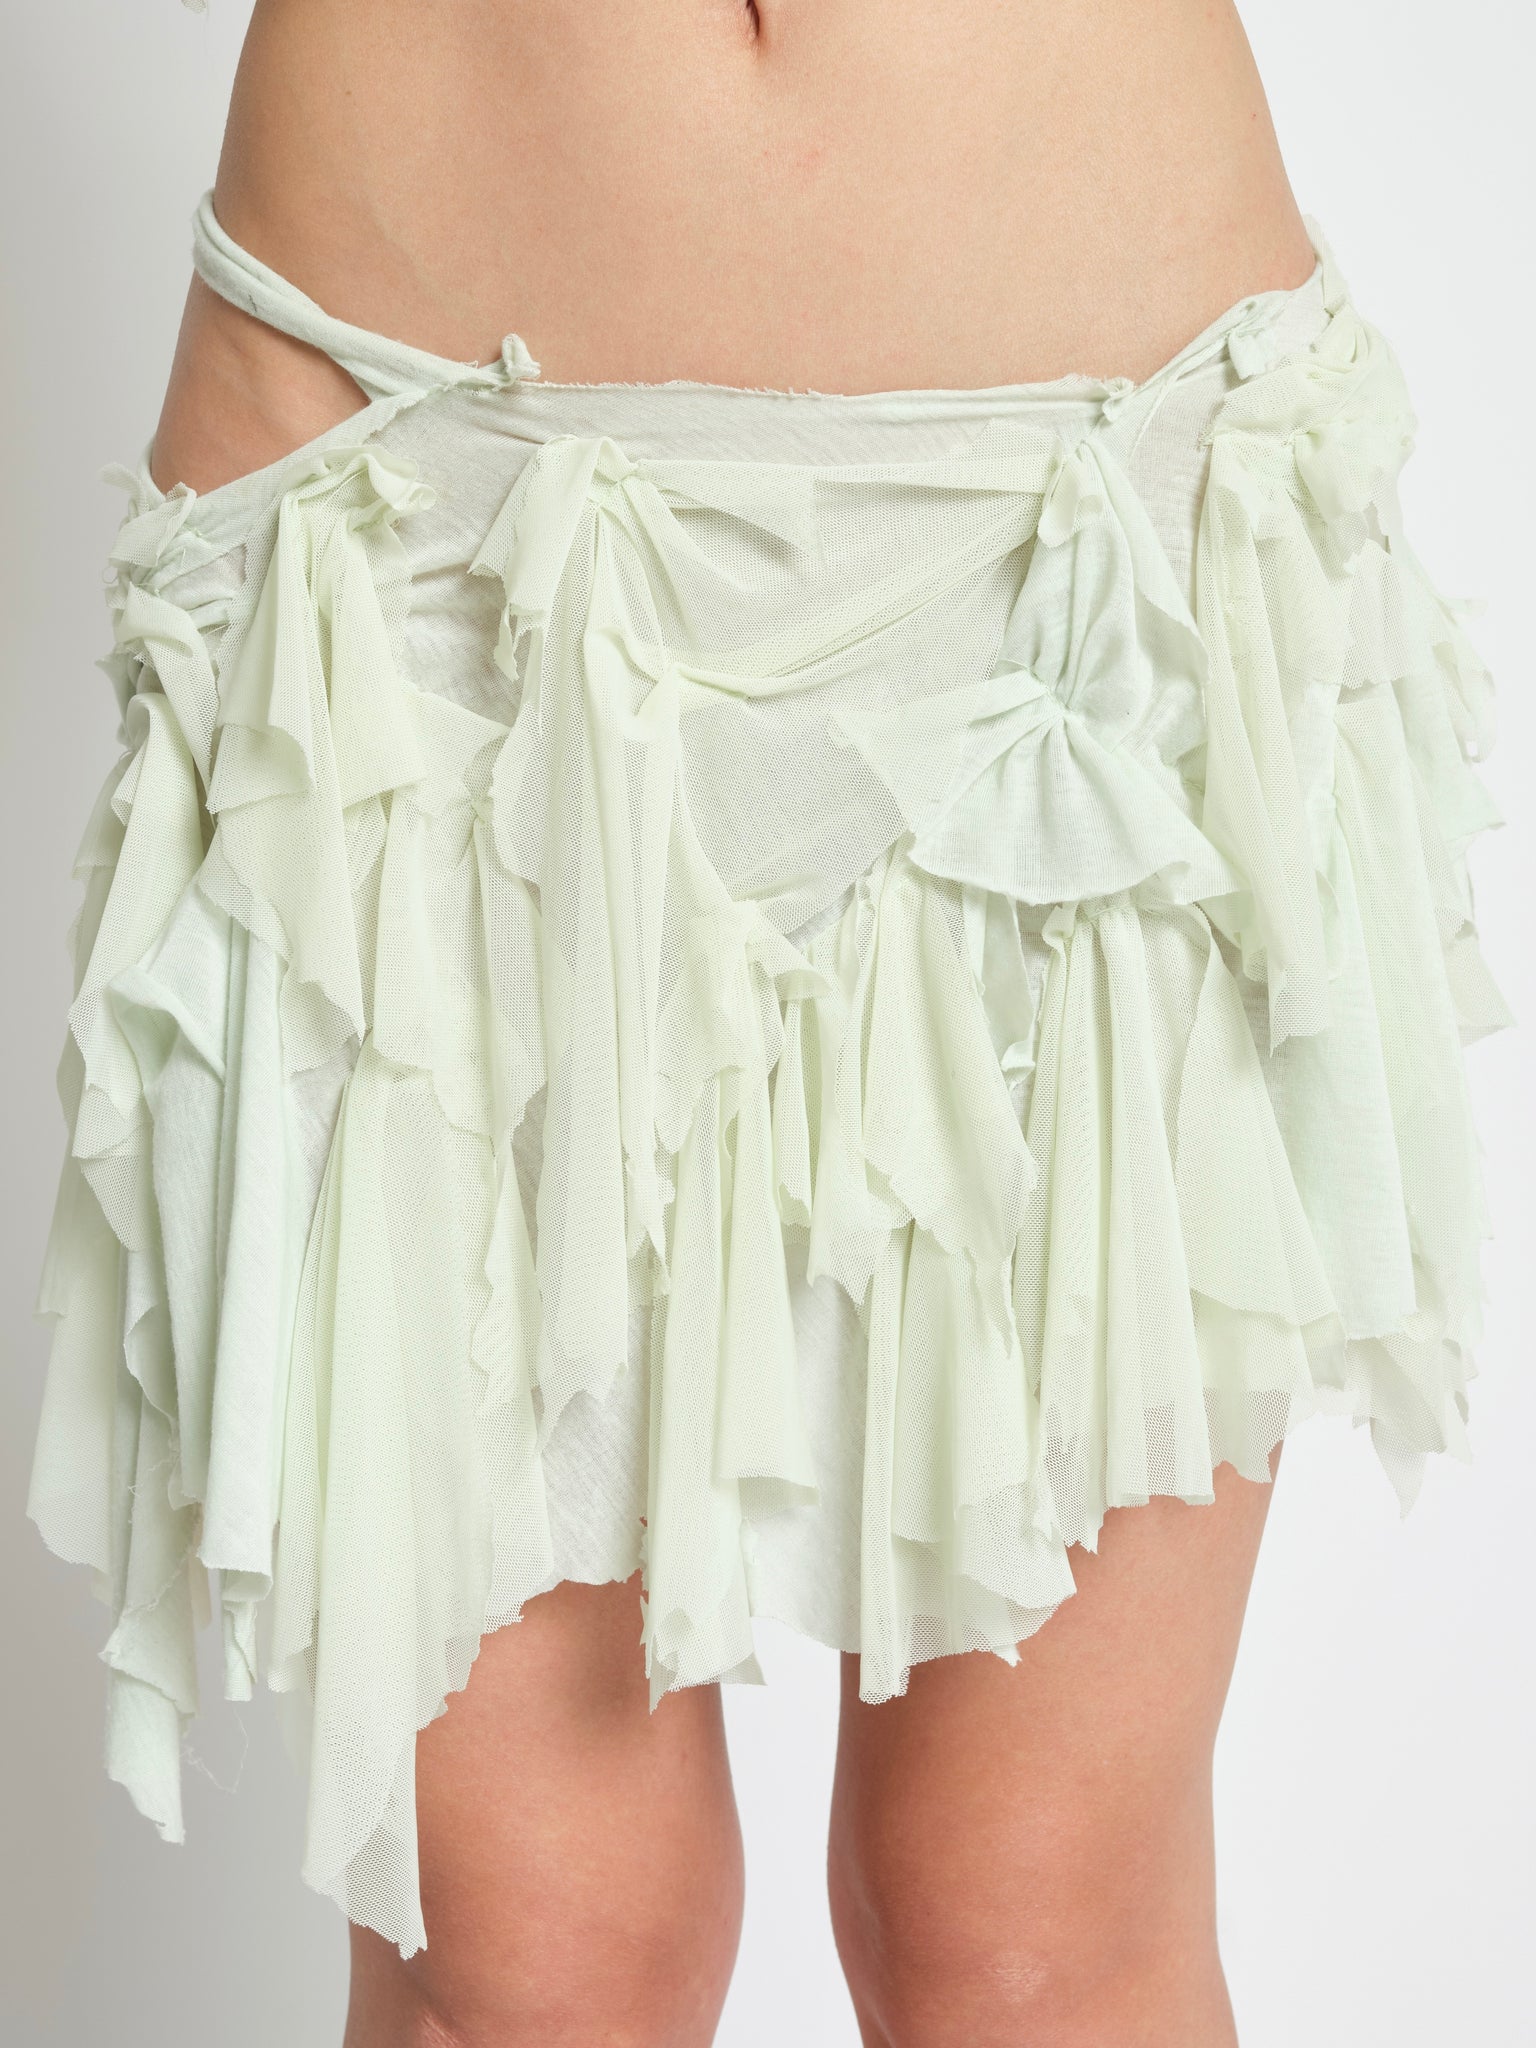 Ivy Heart Skirt